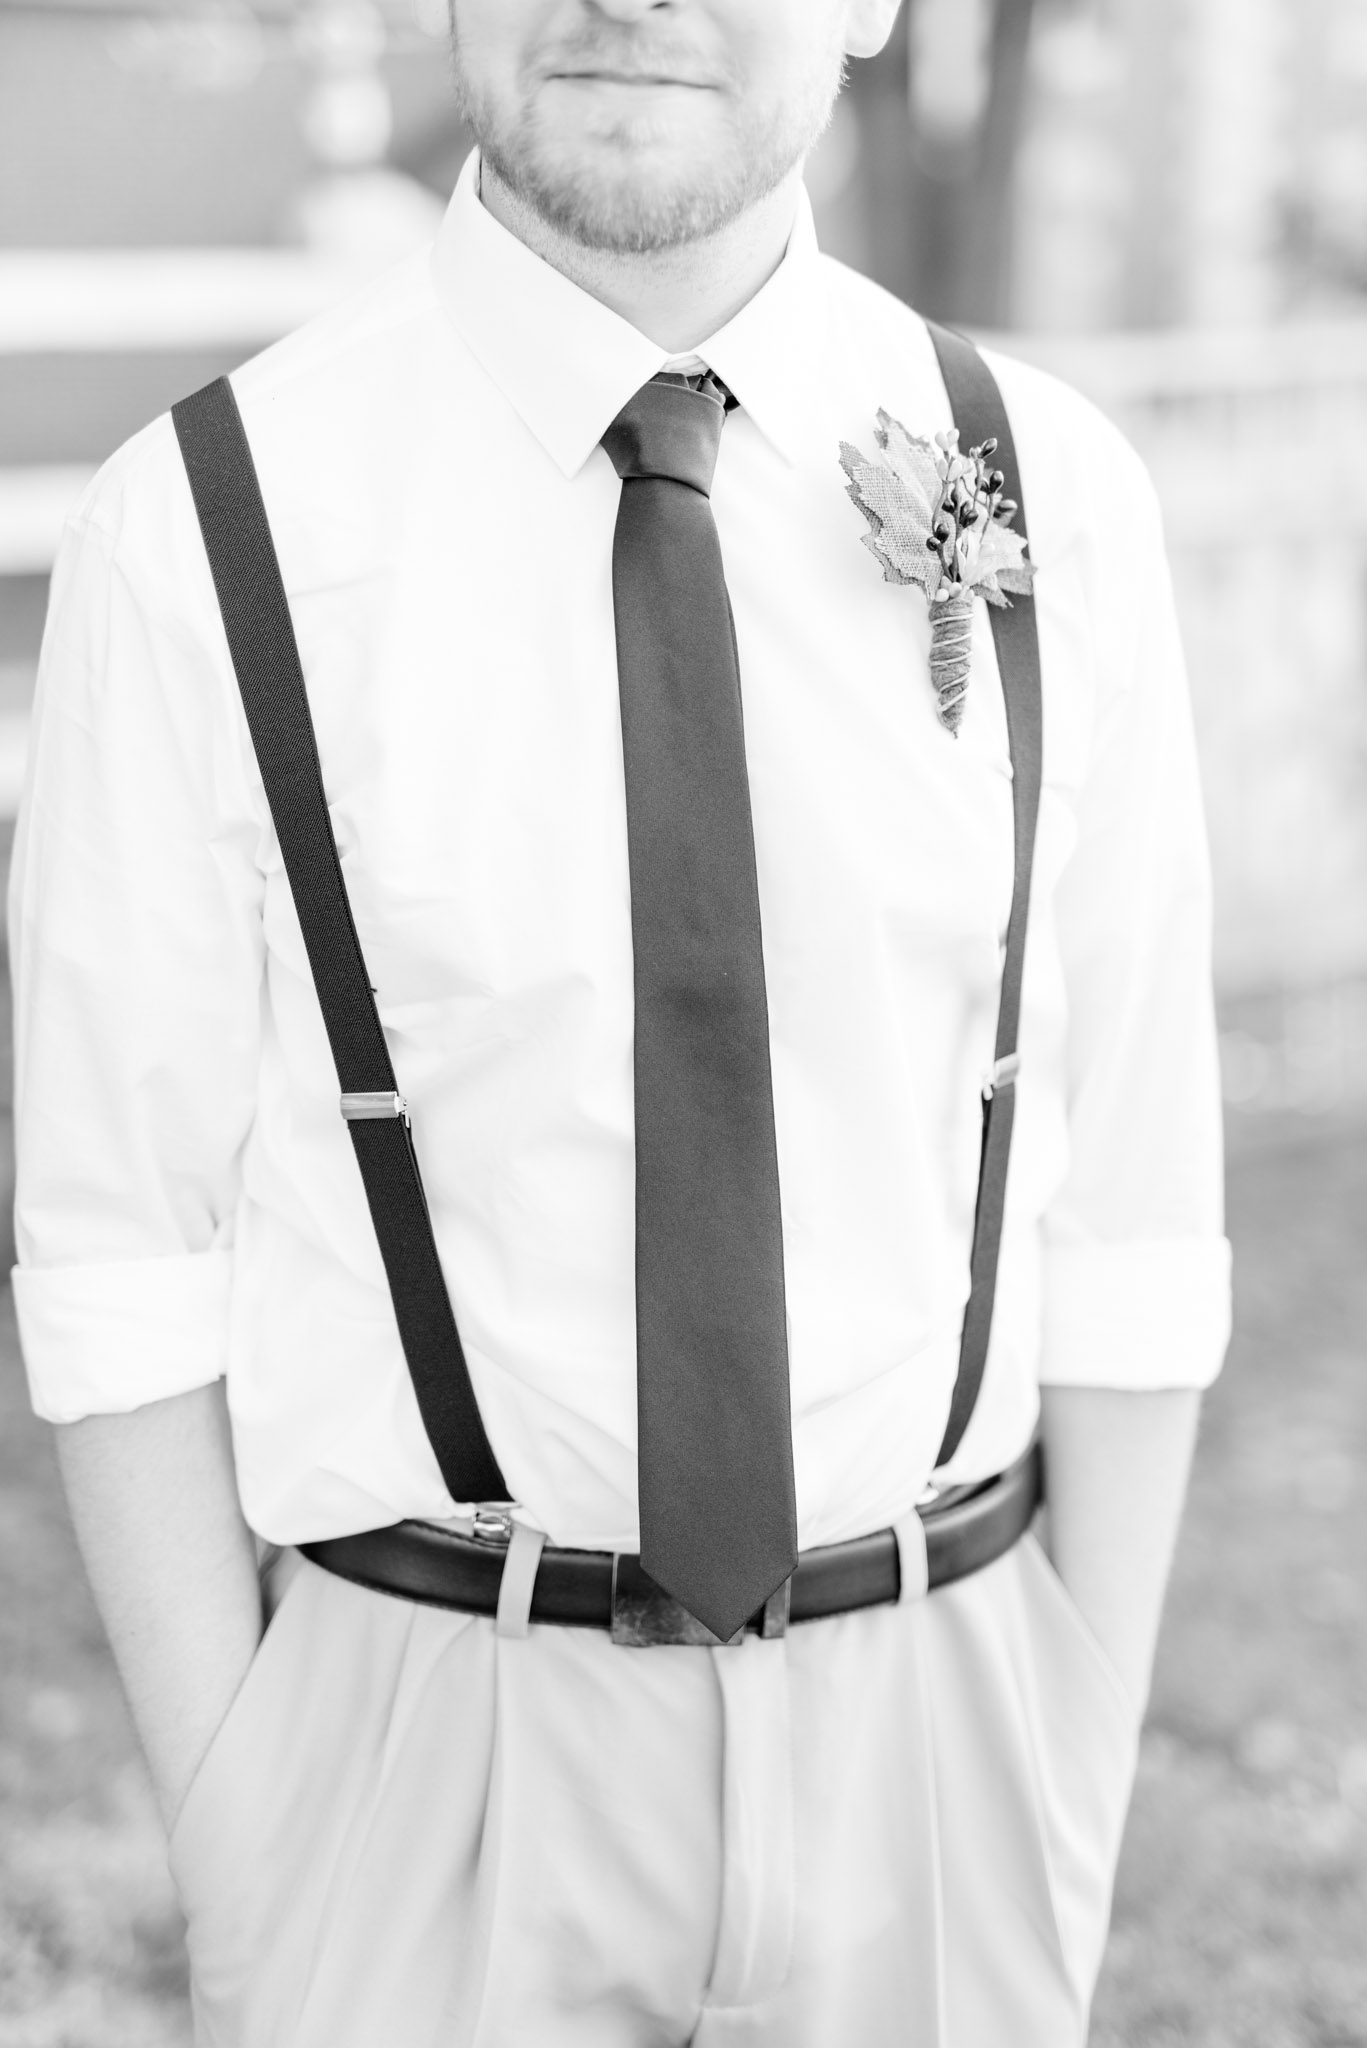 Closeup of Groom's shirt, tie, and suspenders.